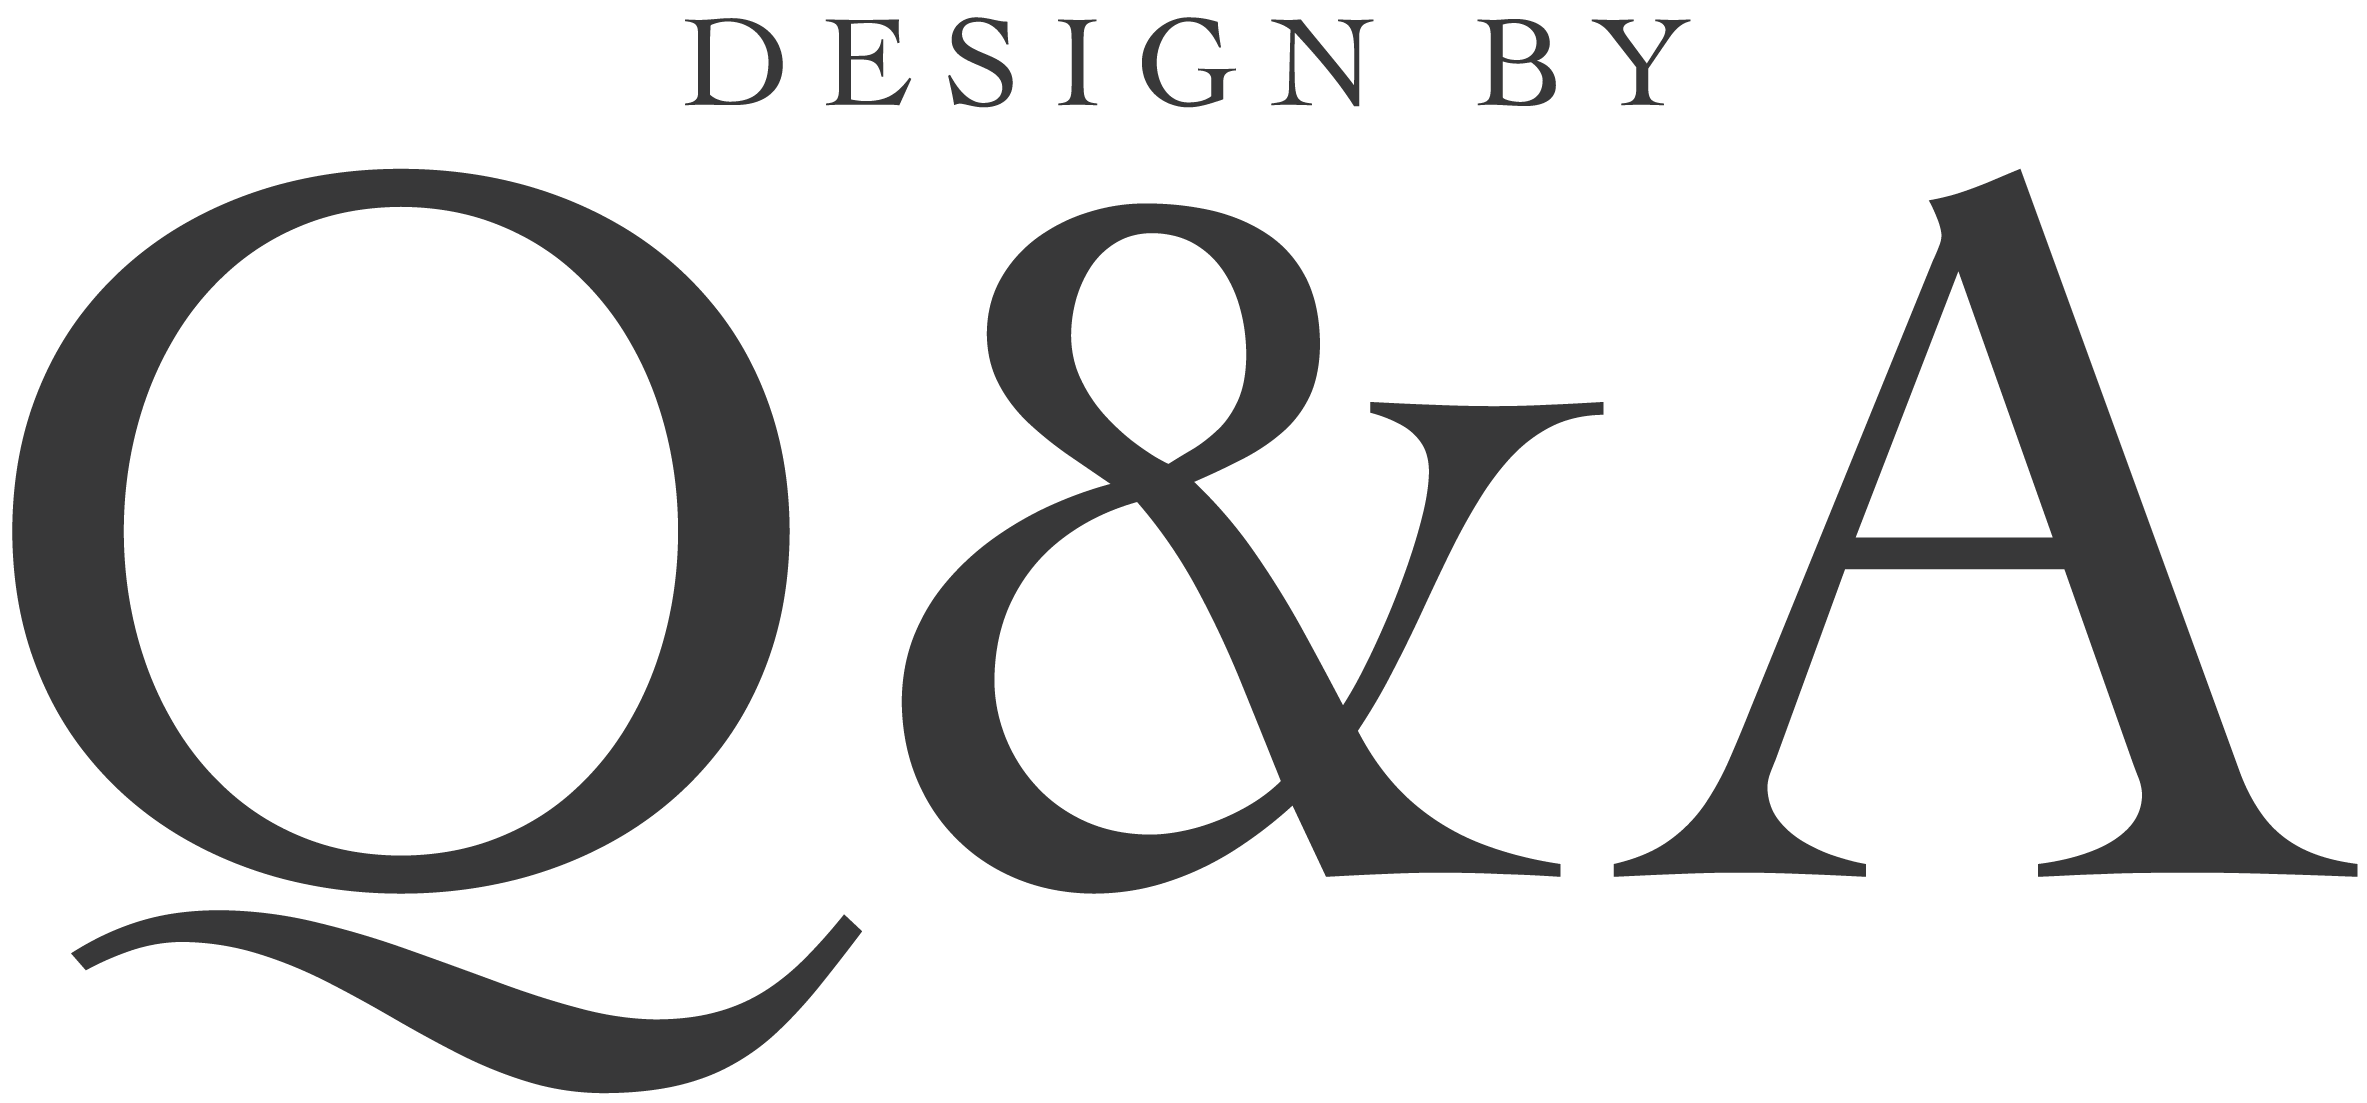 Design by Q & A